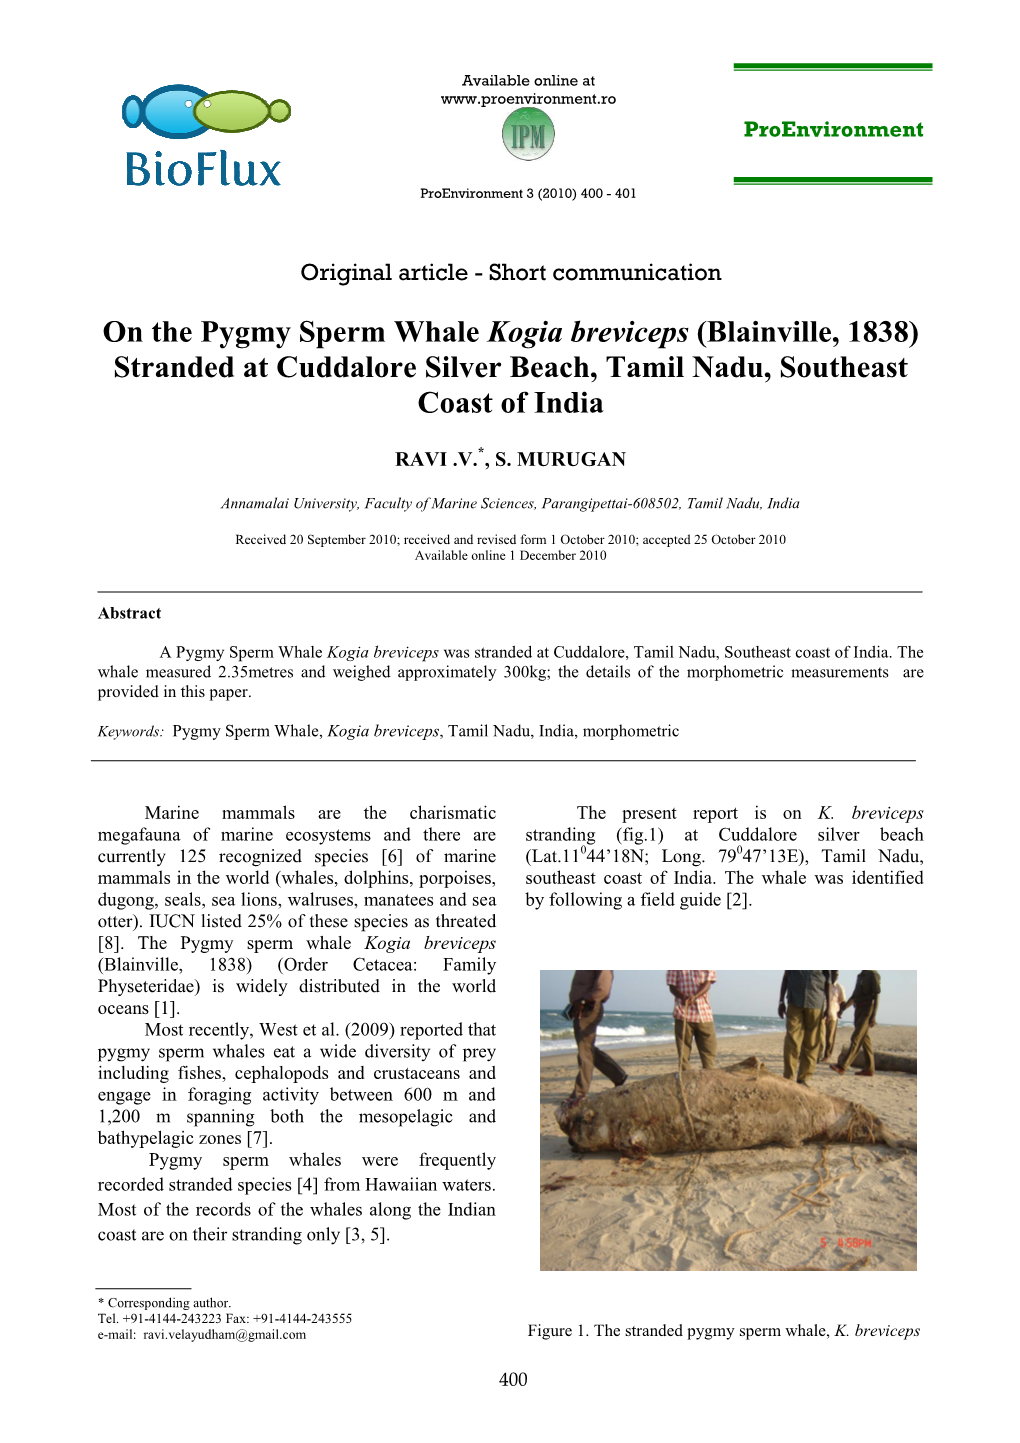 On the Pygmy Sperm Whale Kogia Breviceps (Blainville, 1838) Stranded at Cuddalore Silver Beach, Tamil Nadu, Southeast Coast of India